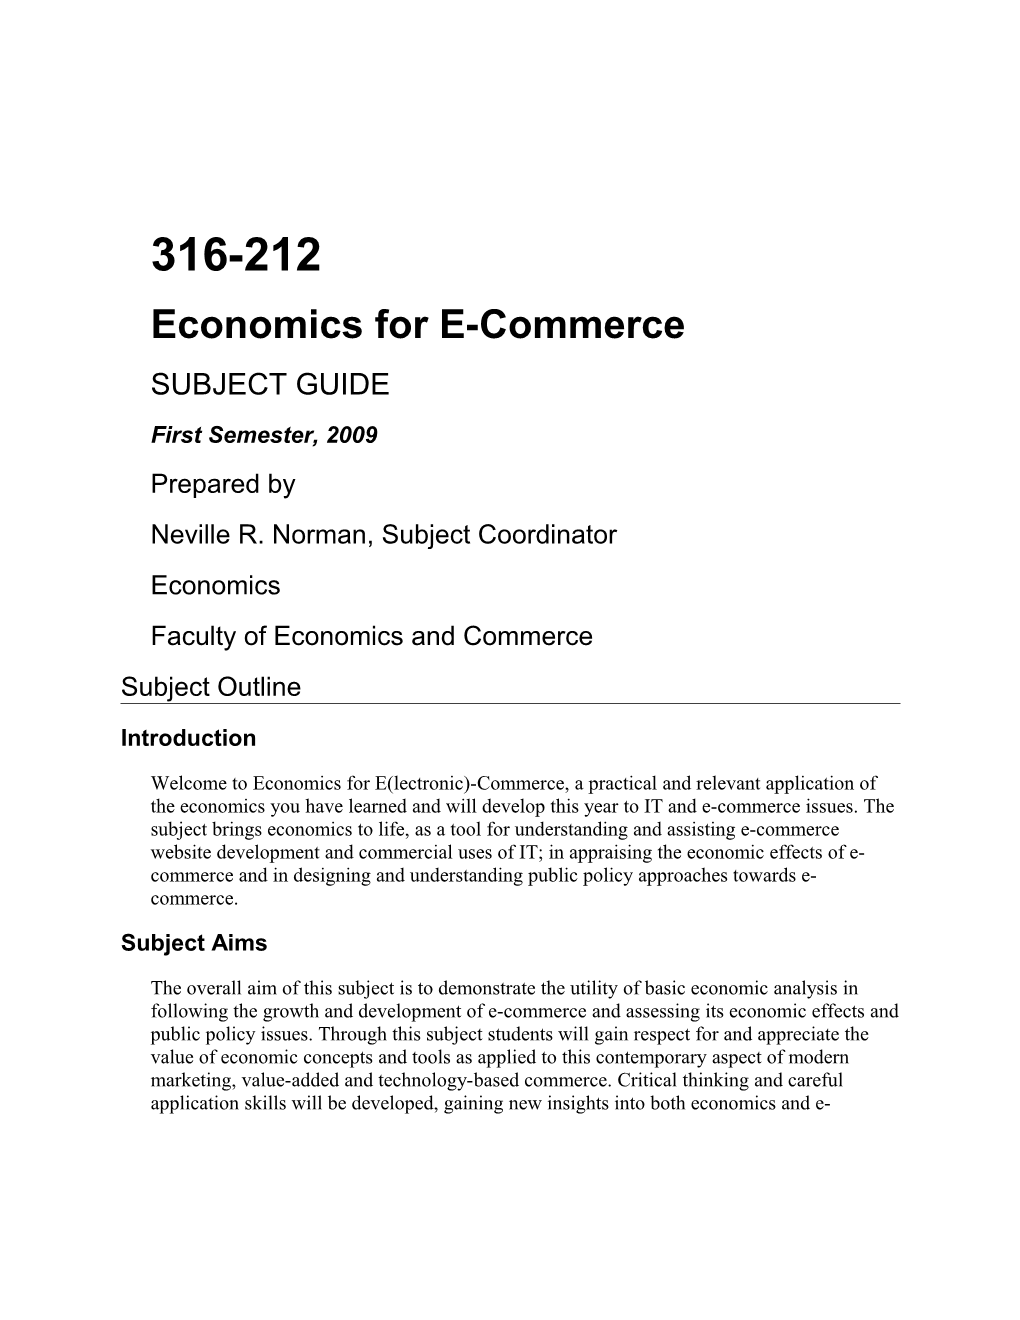 Economics for E-Commerce